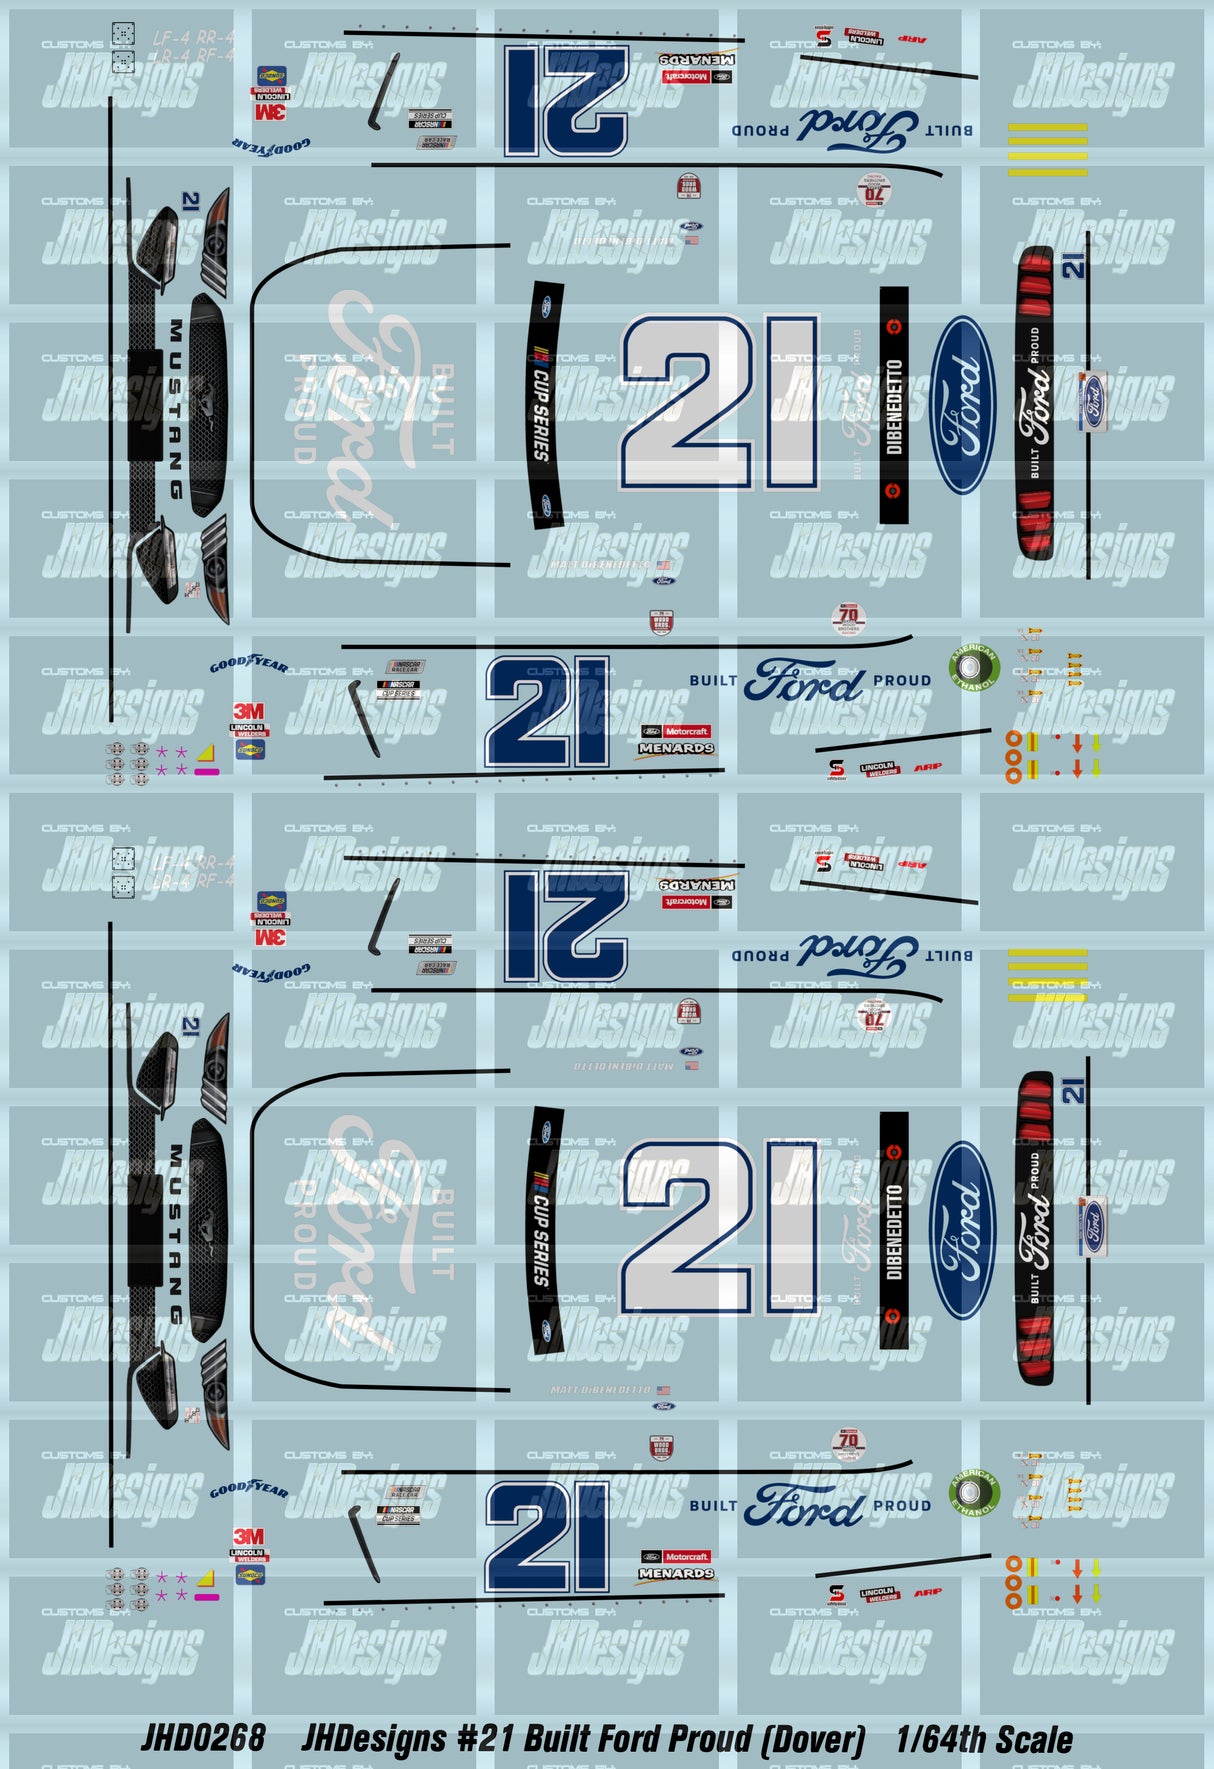 JH Designs Matt DiBenedetto 2020 iRACING #21 Built Ford Tough (Dover Race) 1:64 Racecar Decal Set